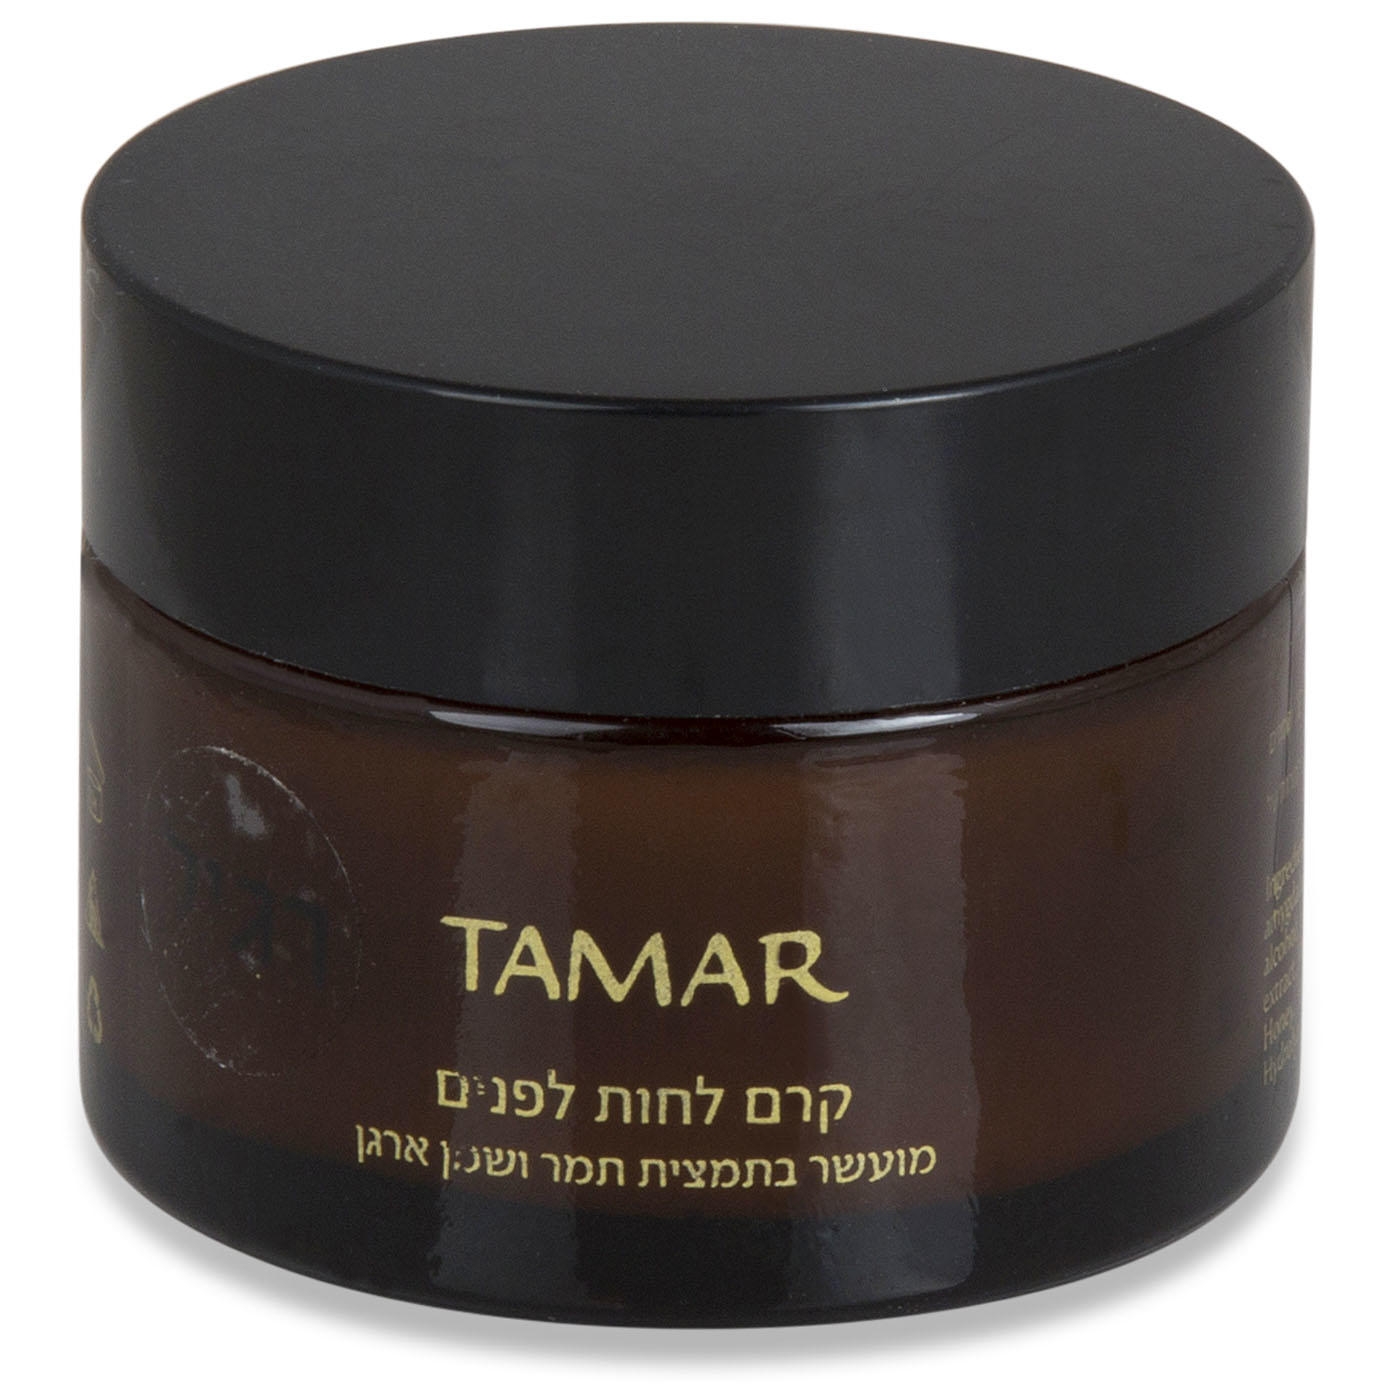 Schwartz Tamar Dates and Argan Oil Face Cream - 1